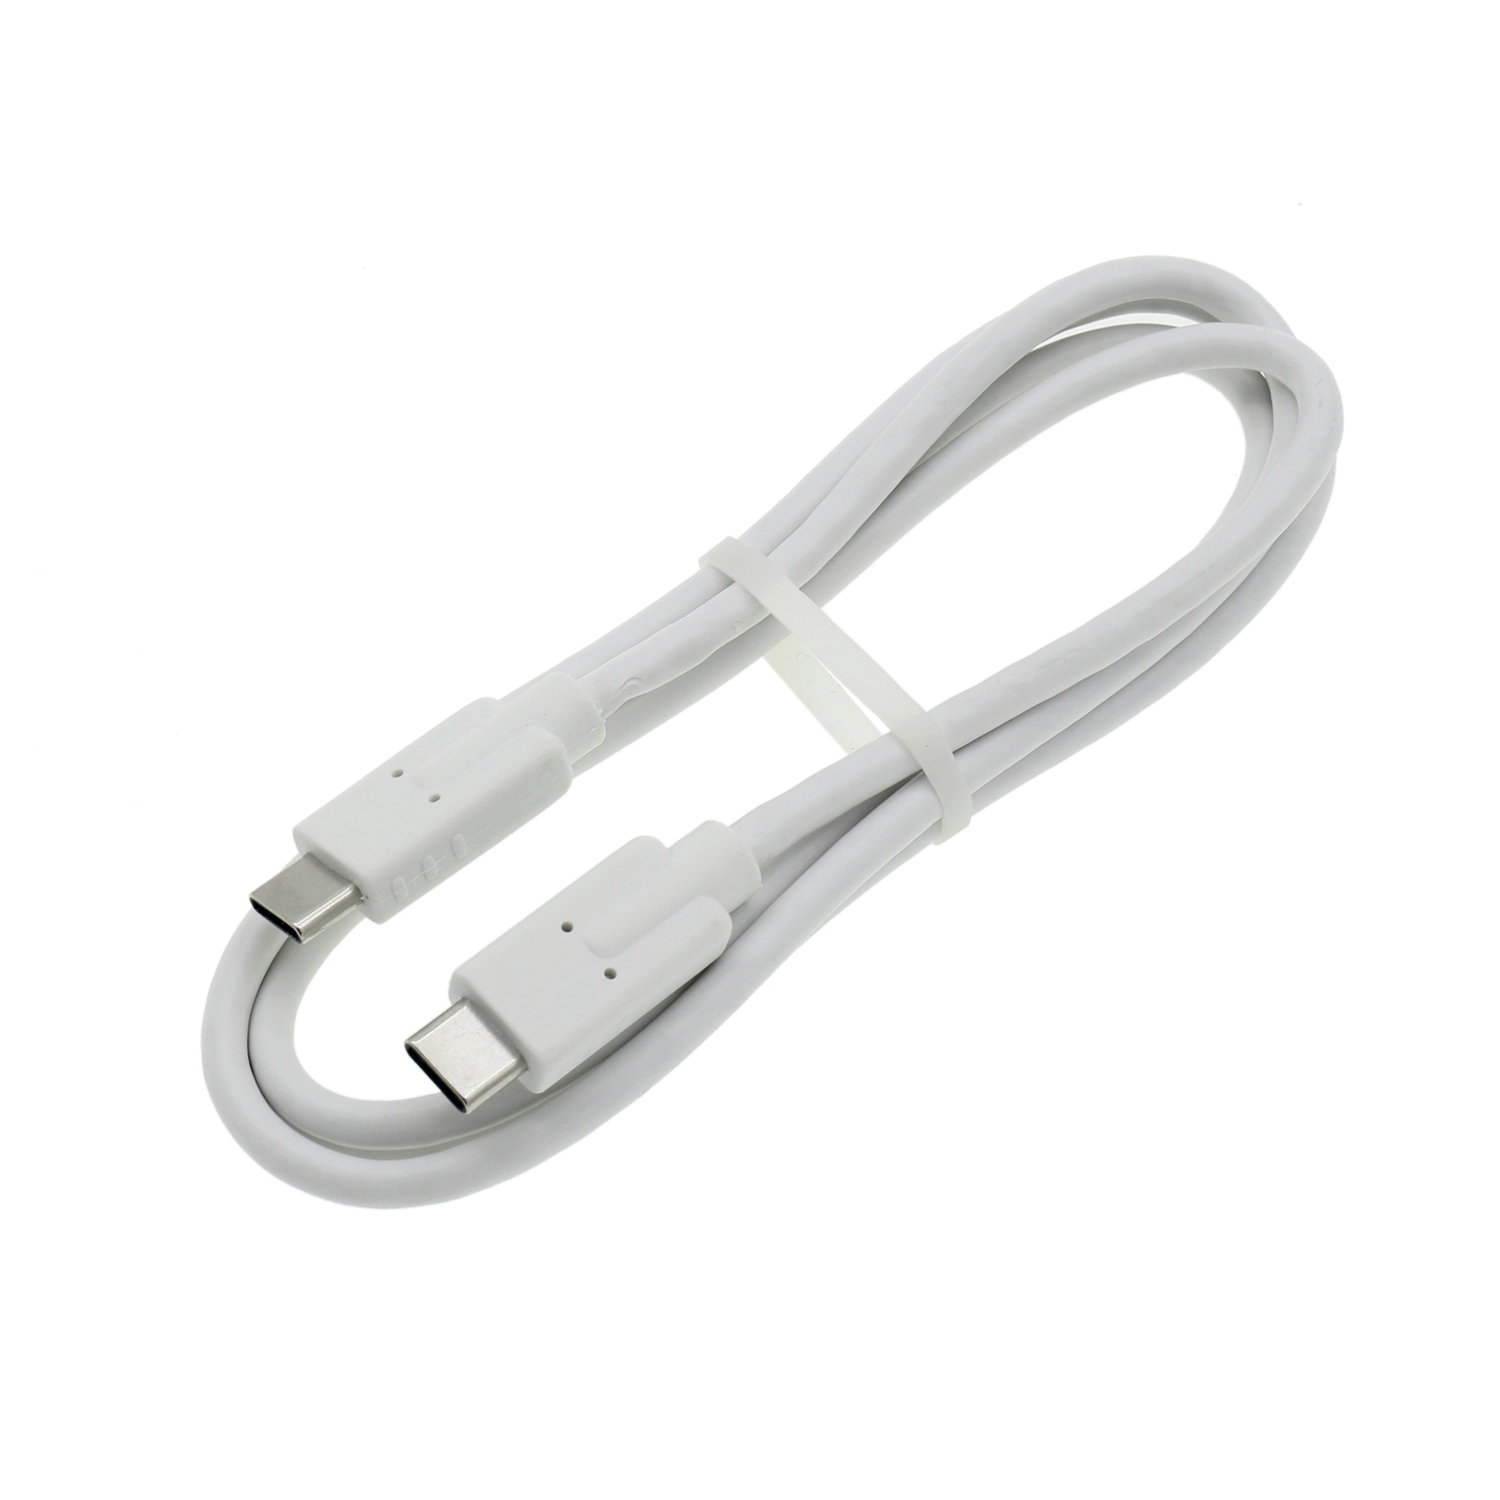 USB3.1 Gen 2 5A USB-C hanggang USB-C Cable na may E-Marker Chip OEM